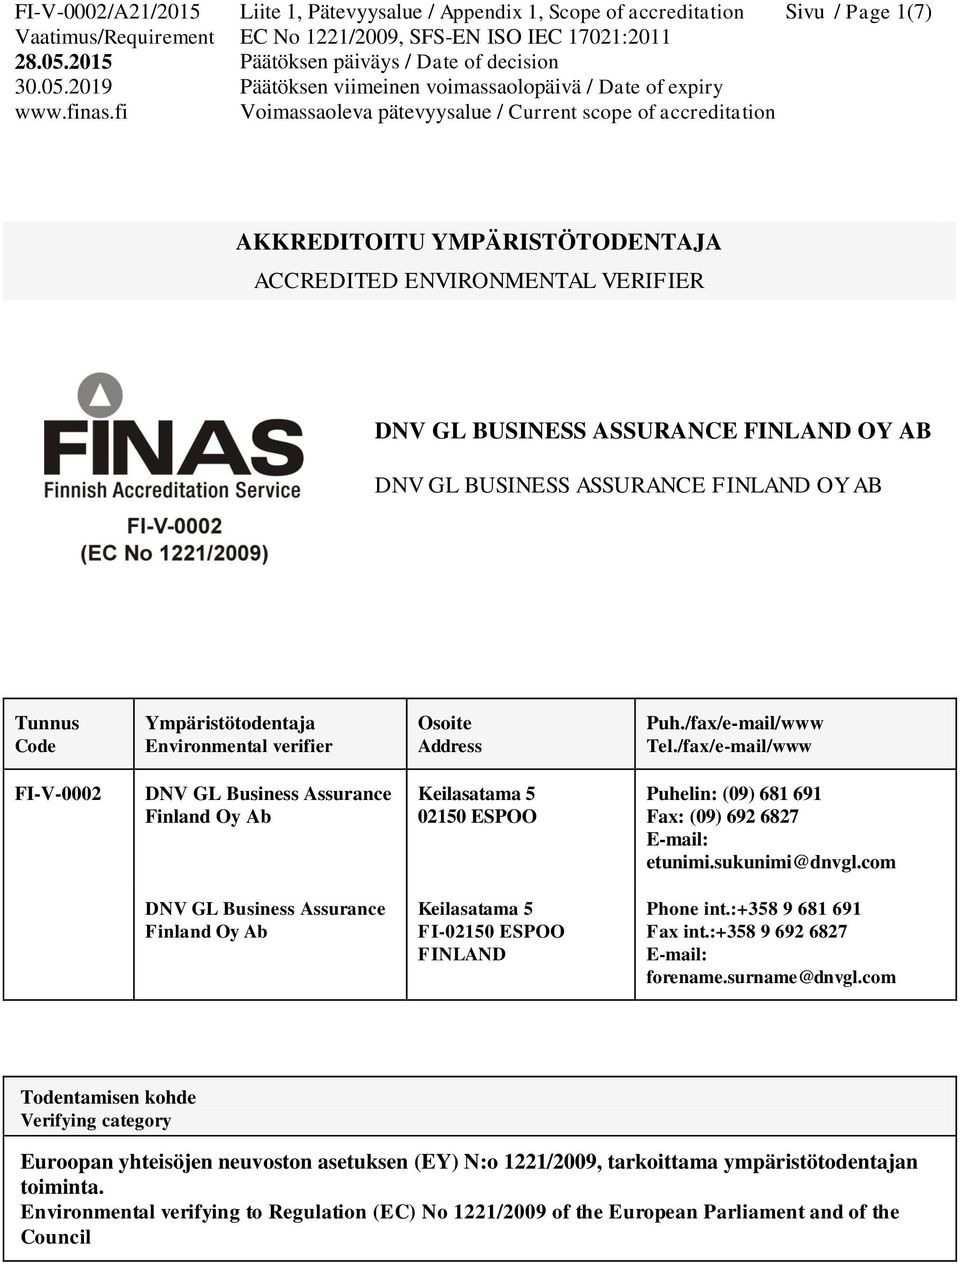 /fax/e-mail/www FI-V-0002 DNV GL Business Assurance Finland Oy Ab Keilasatama 5 02150 ESPOO Puhelin: (09) 681 691 Fax: (09) 692 6827 E-mail: etunimi.sukunimi@dnvgl.